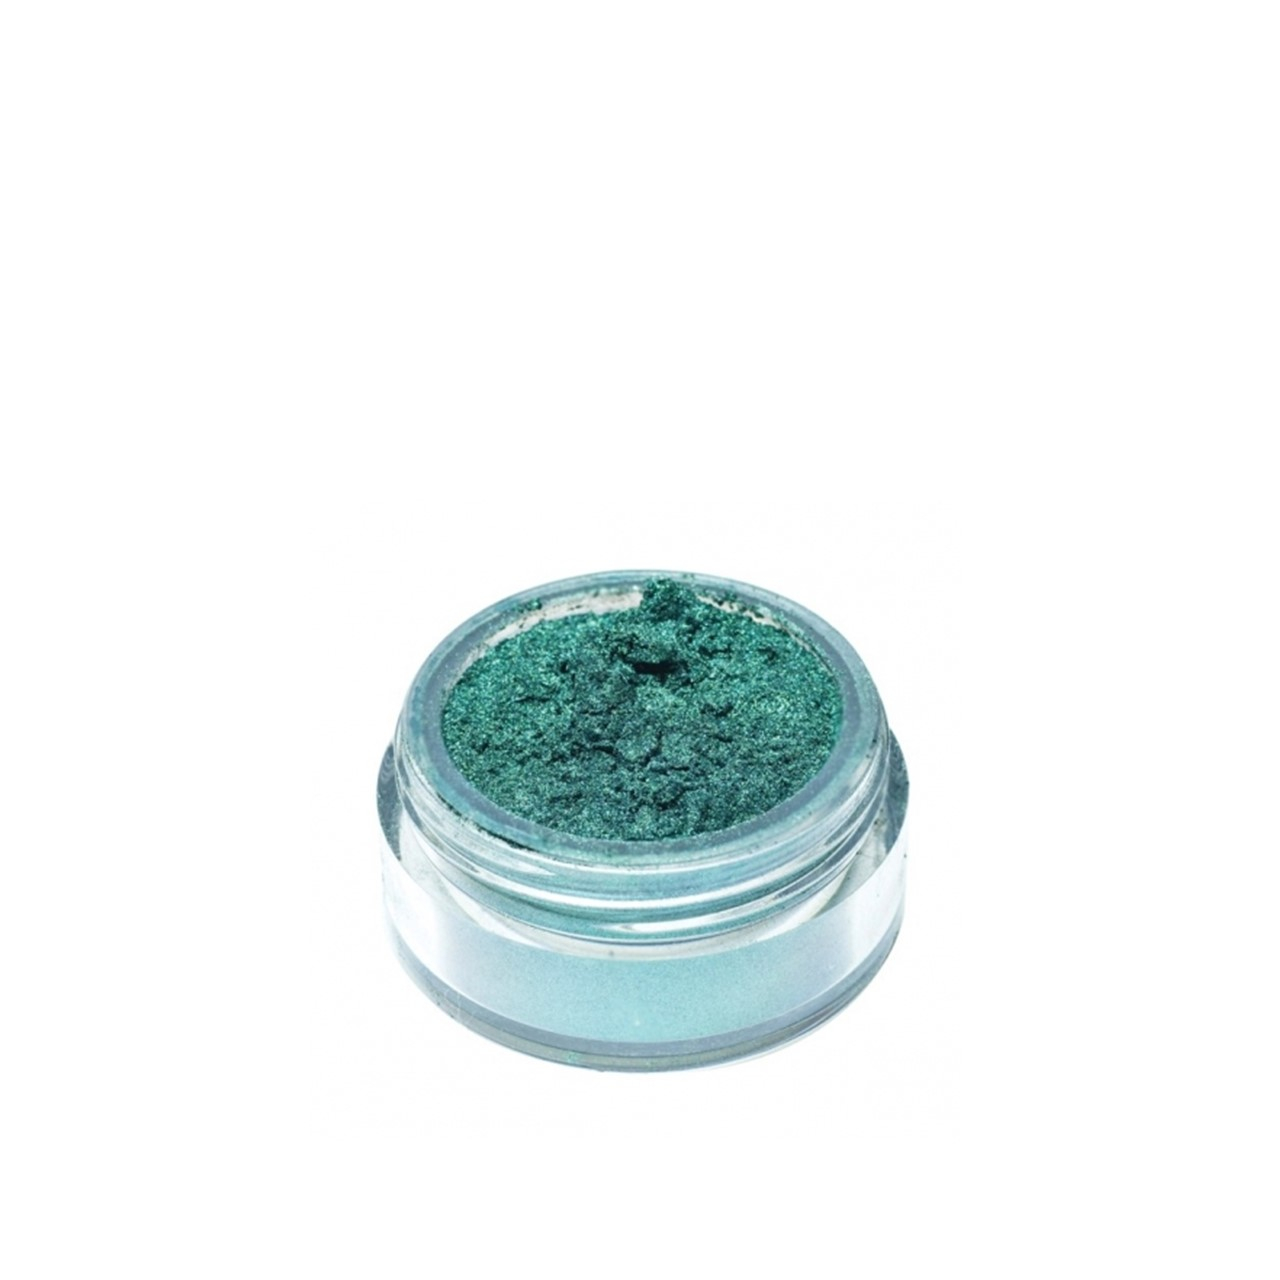 Neve Cosmetics Mineral Eyeshadow Costa Smeralda 2g